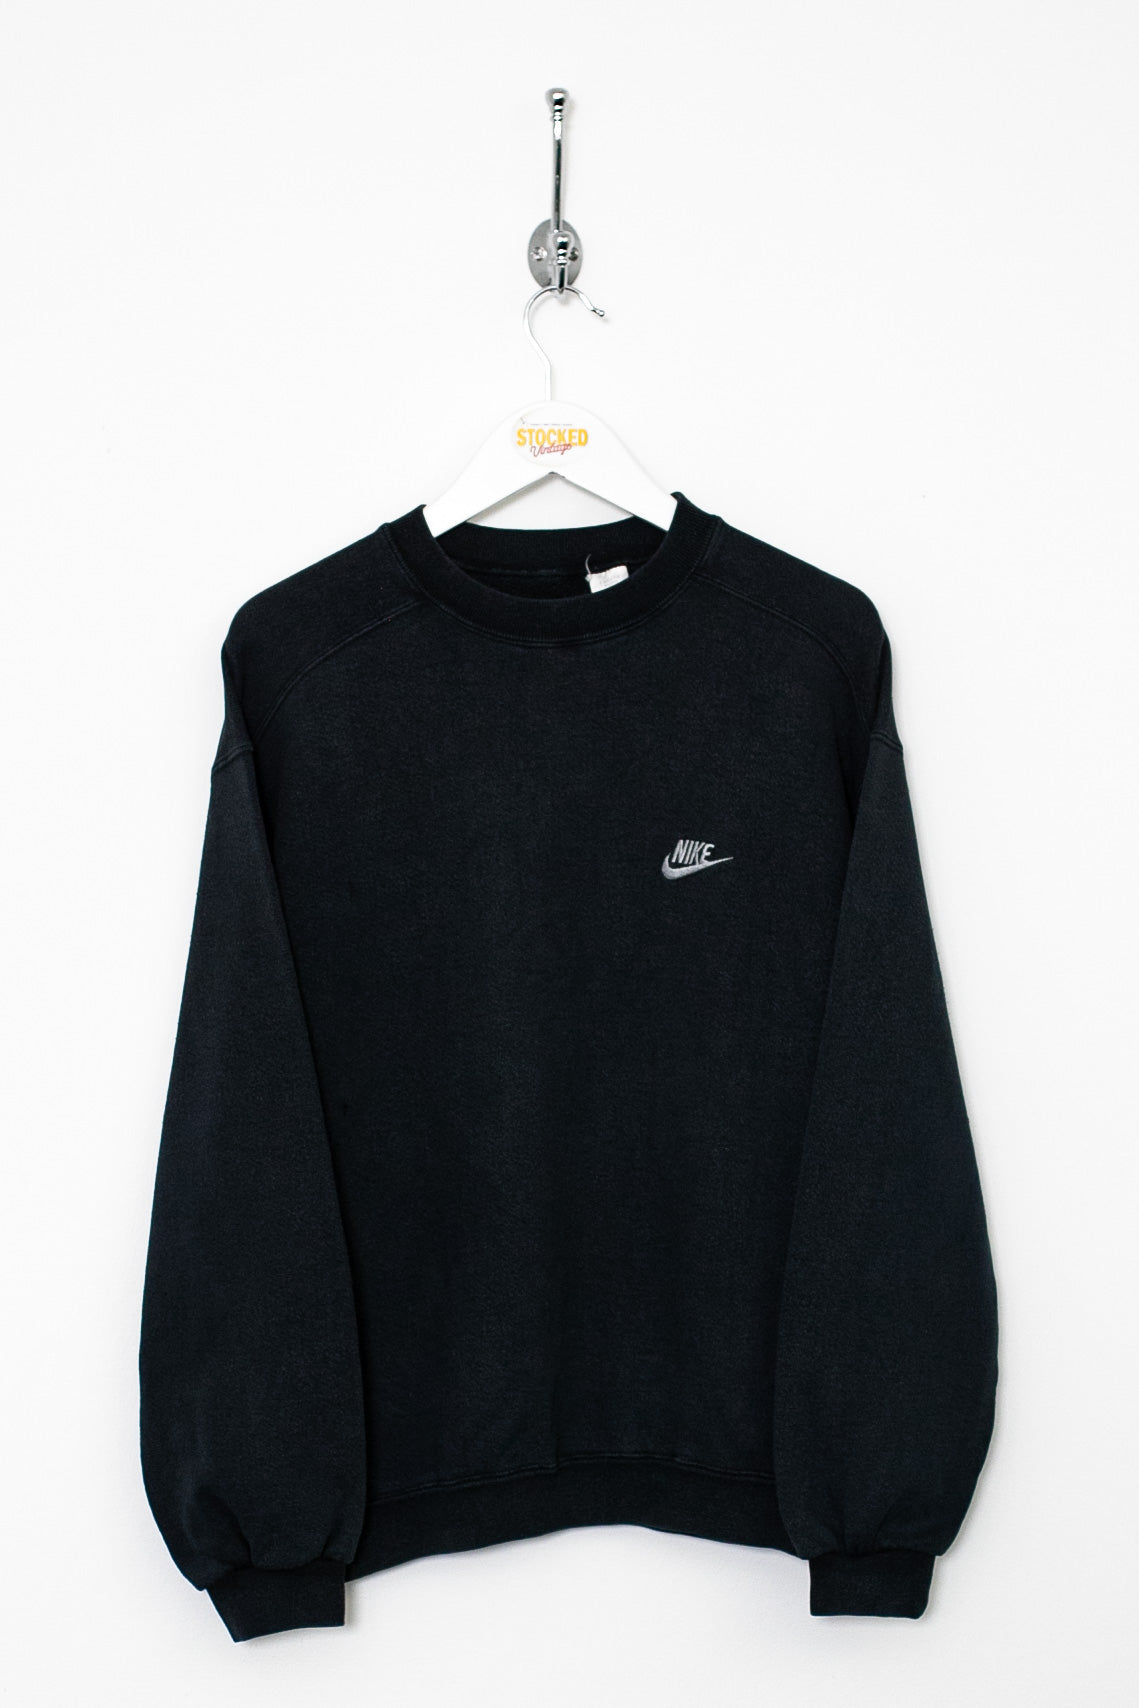 Womens 90s Nike Sweatshirt (L)